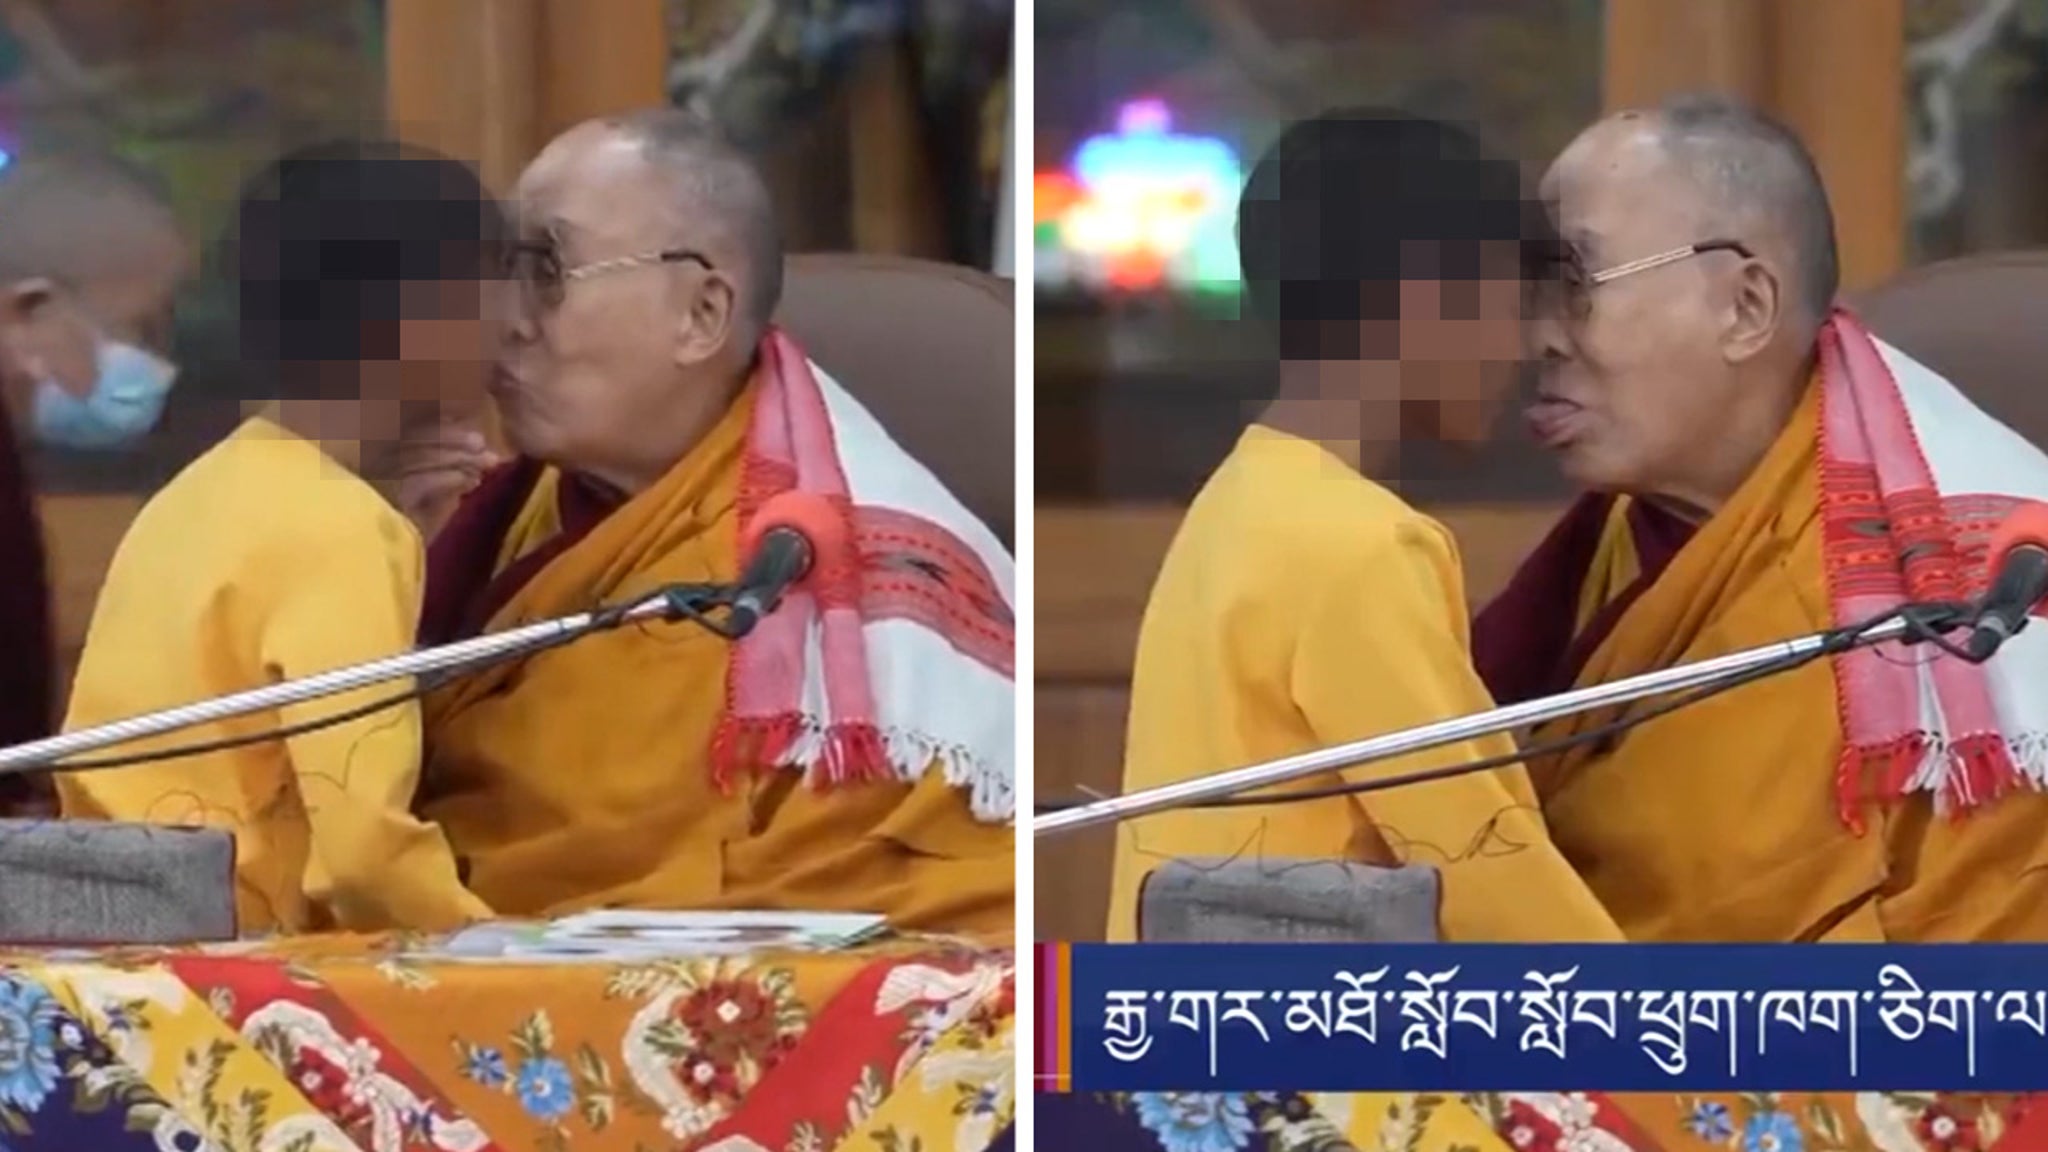 Dalai Lama Apologizes After Asking Child to Suck My Tongue On Camera